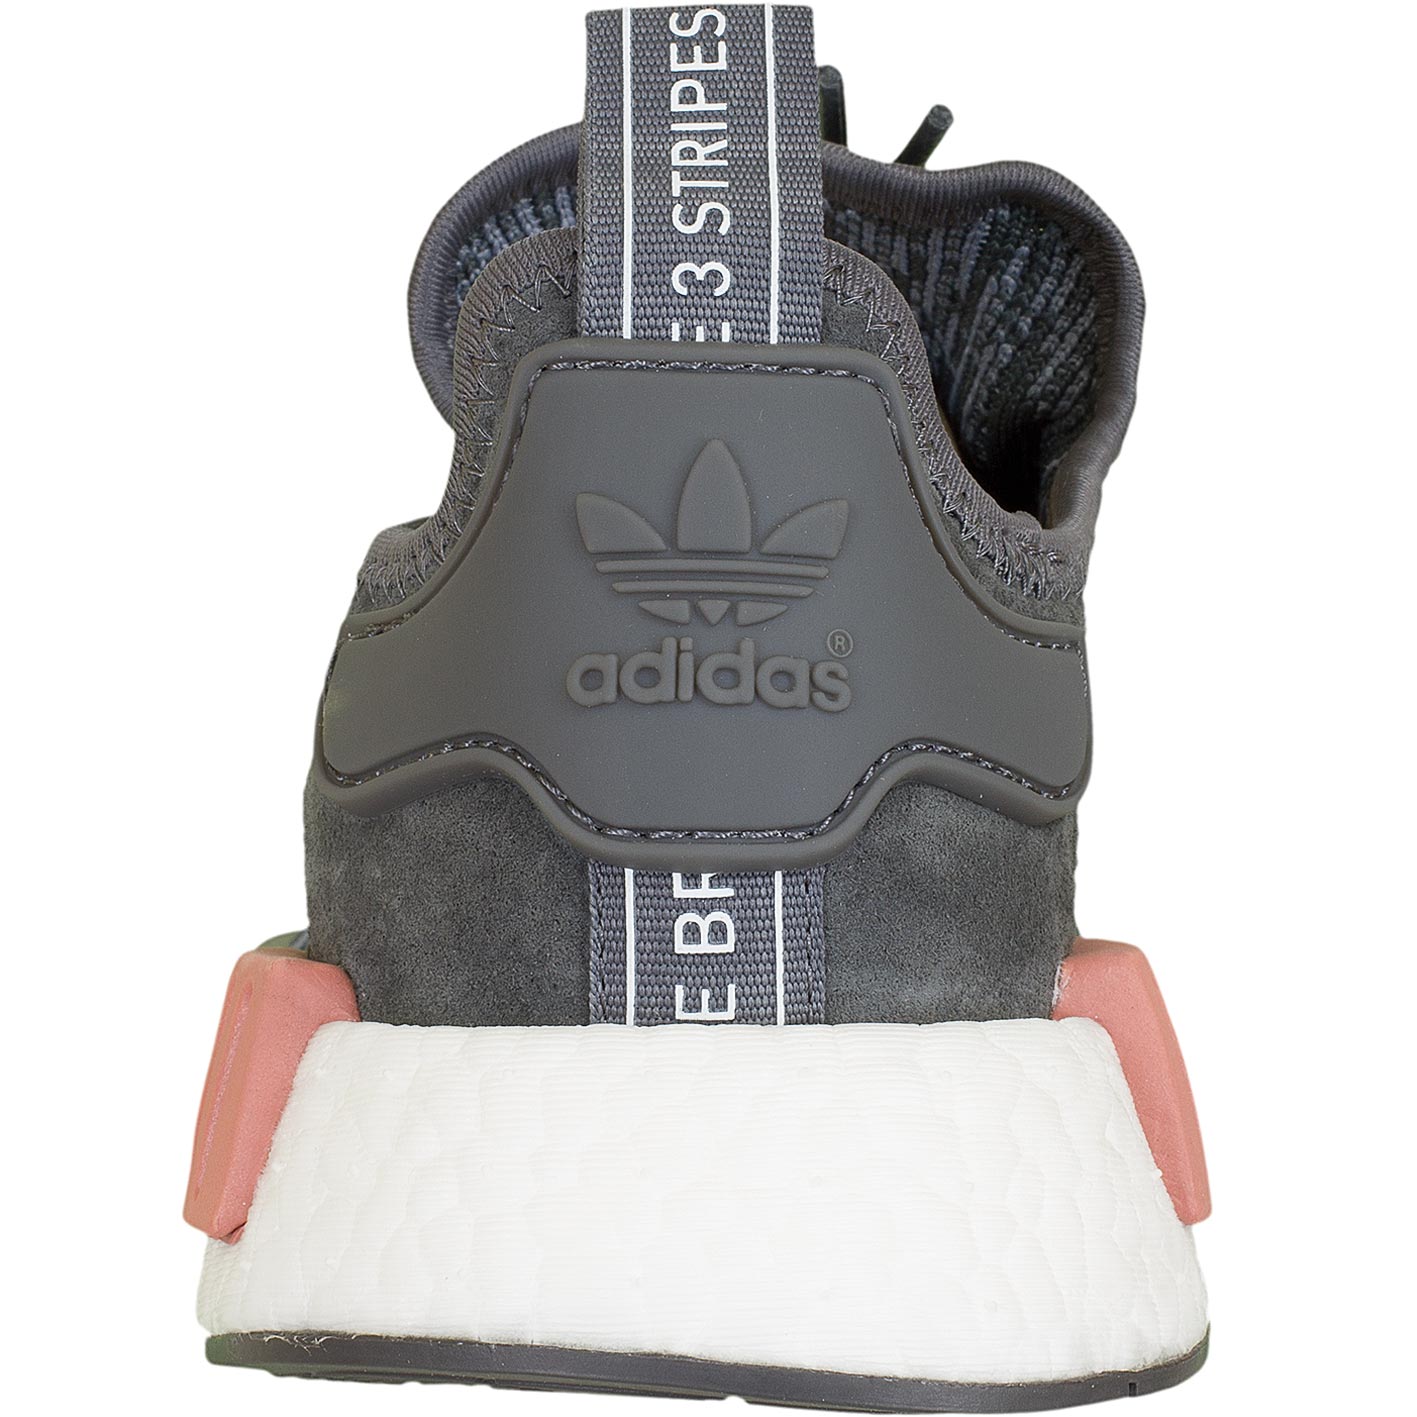 ☆ Adidas Originals Damen Sneaker NMD R1 grau/pink - hier bestellen!